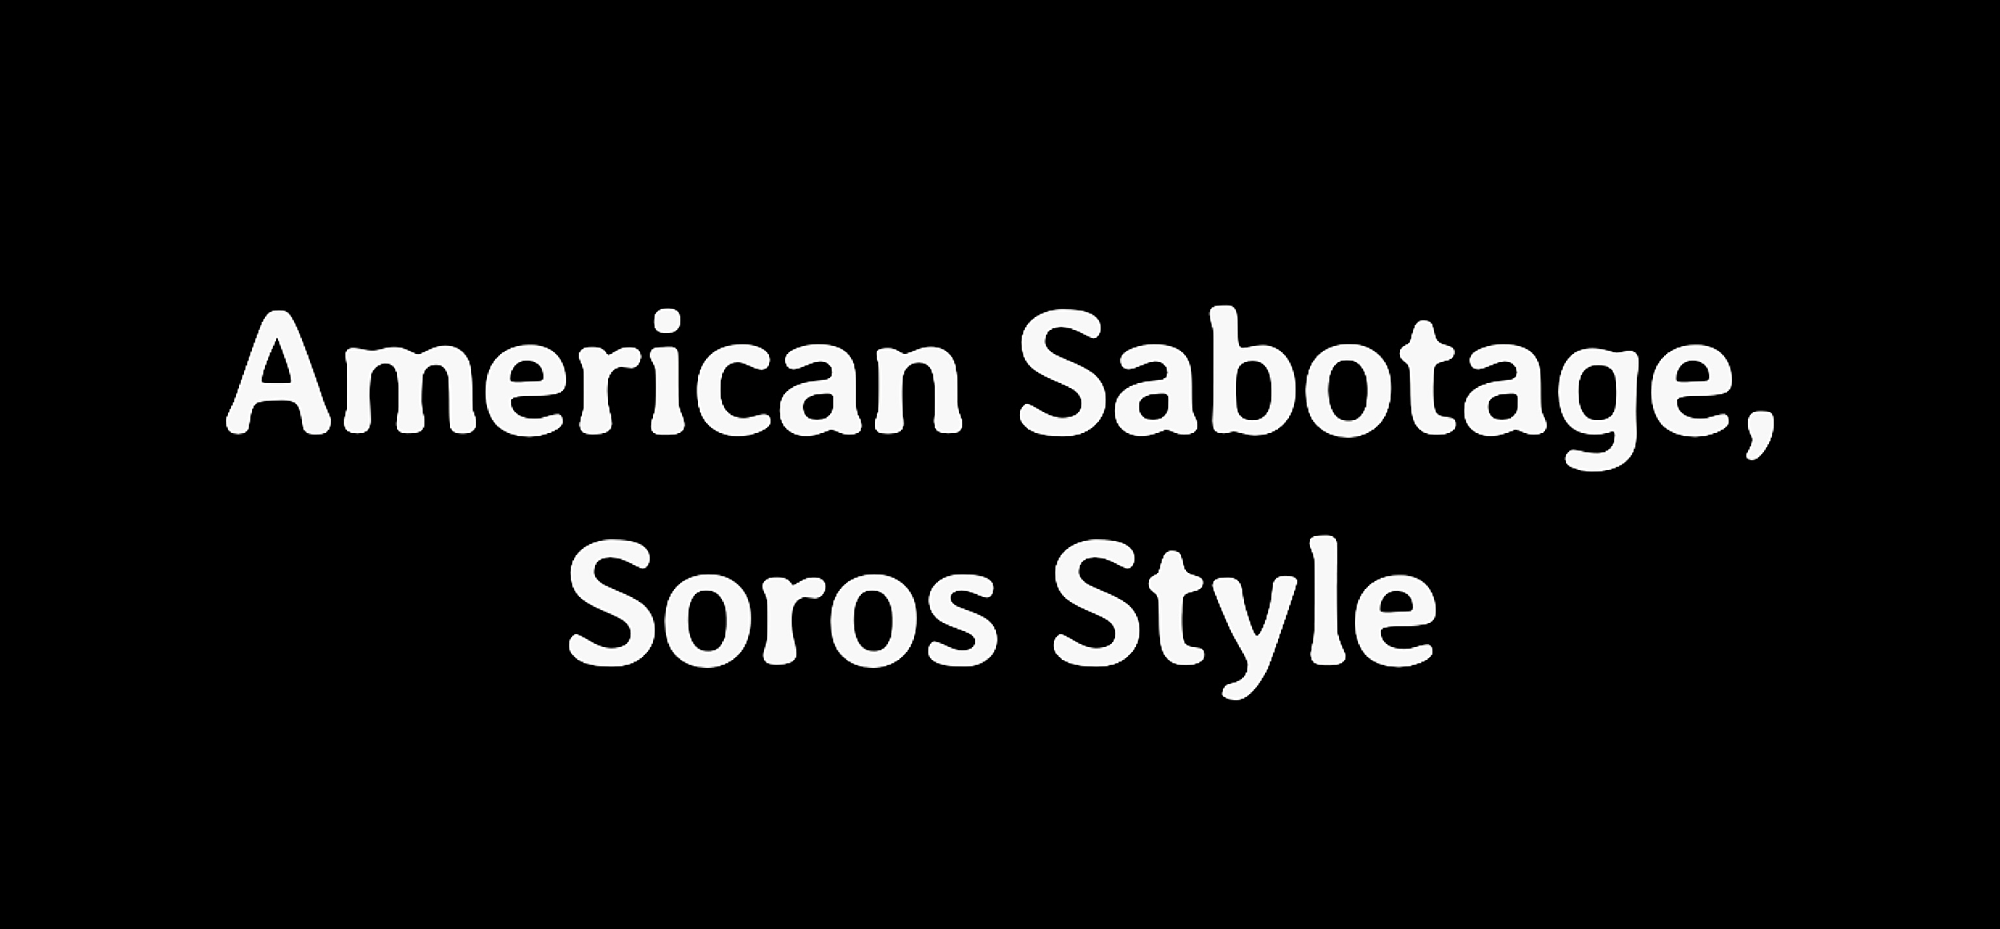 American Sabotage, Soros Style